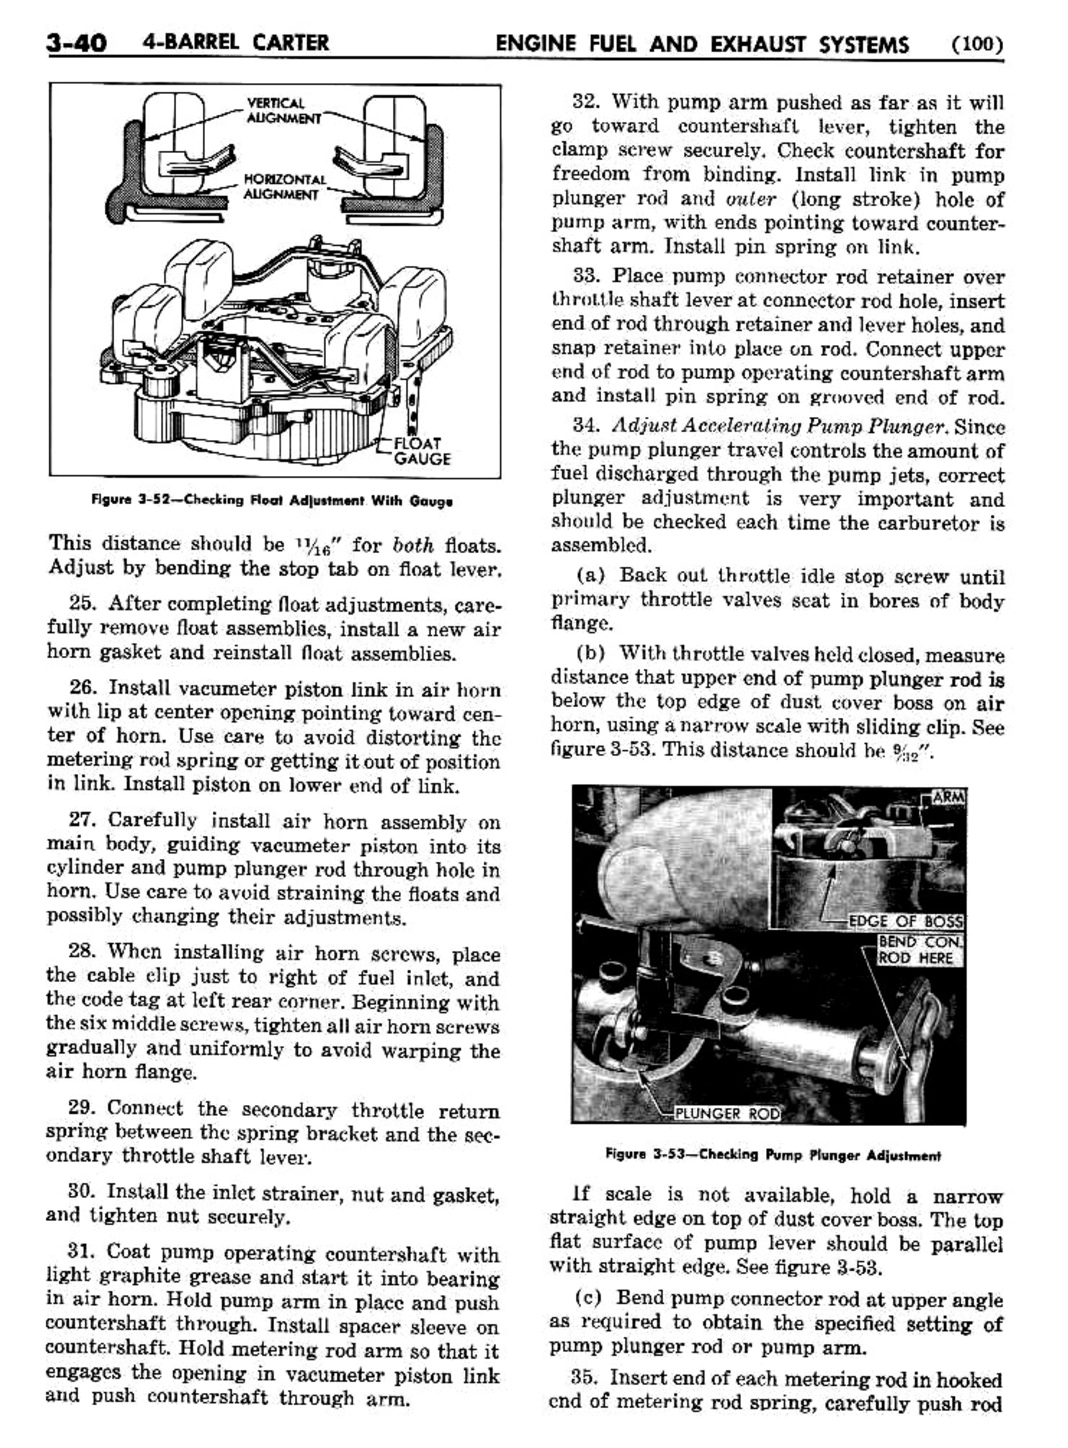 n_04 1956 Buick Shop Manual - Engine Fuel & Exhaust-040-040.jpg